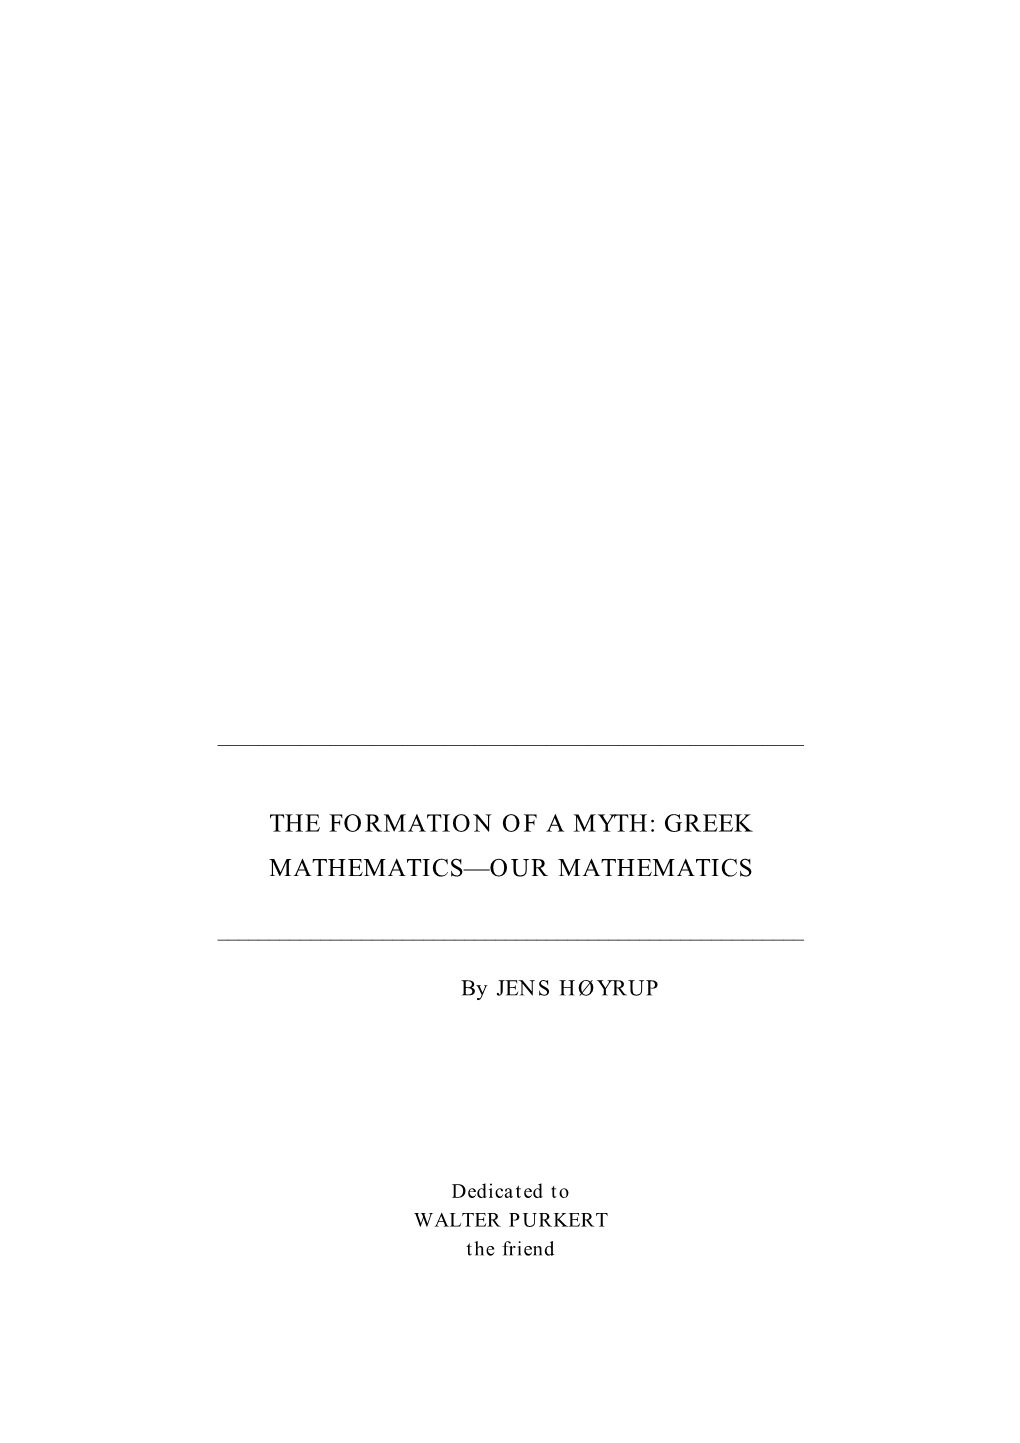 The Formation of a Myth: Greek Mathematics—Our Mathematics